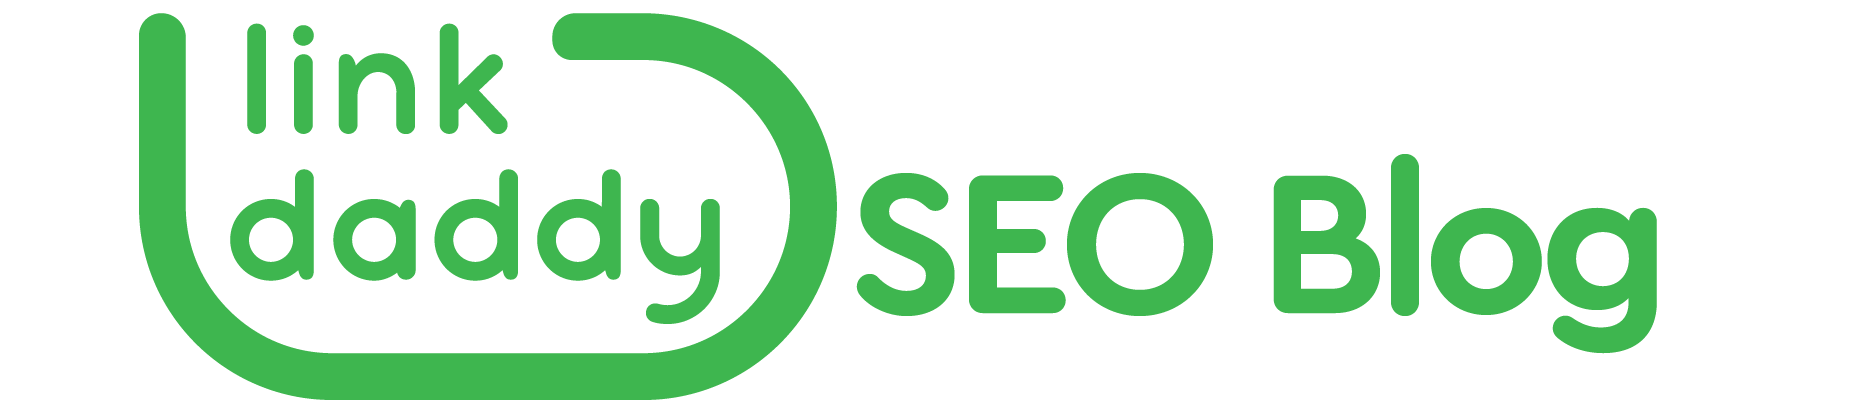 https://storage.googleapis.com/cloudsites/seo-services/861n4pgud/img/cropped-linkdaddy-seoblog-logo.png